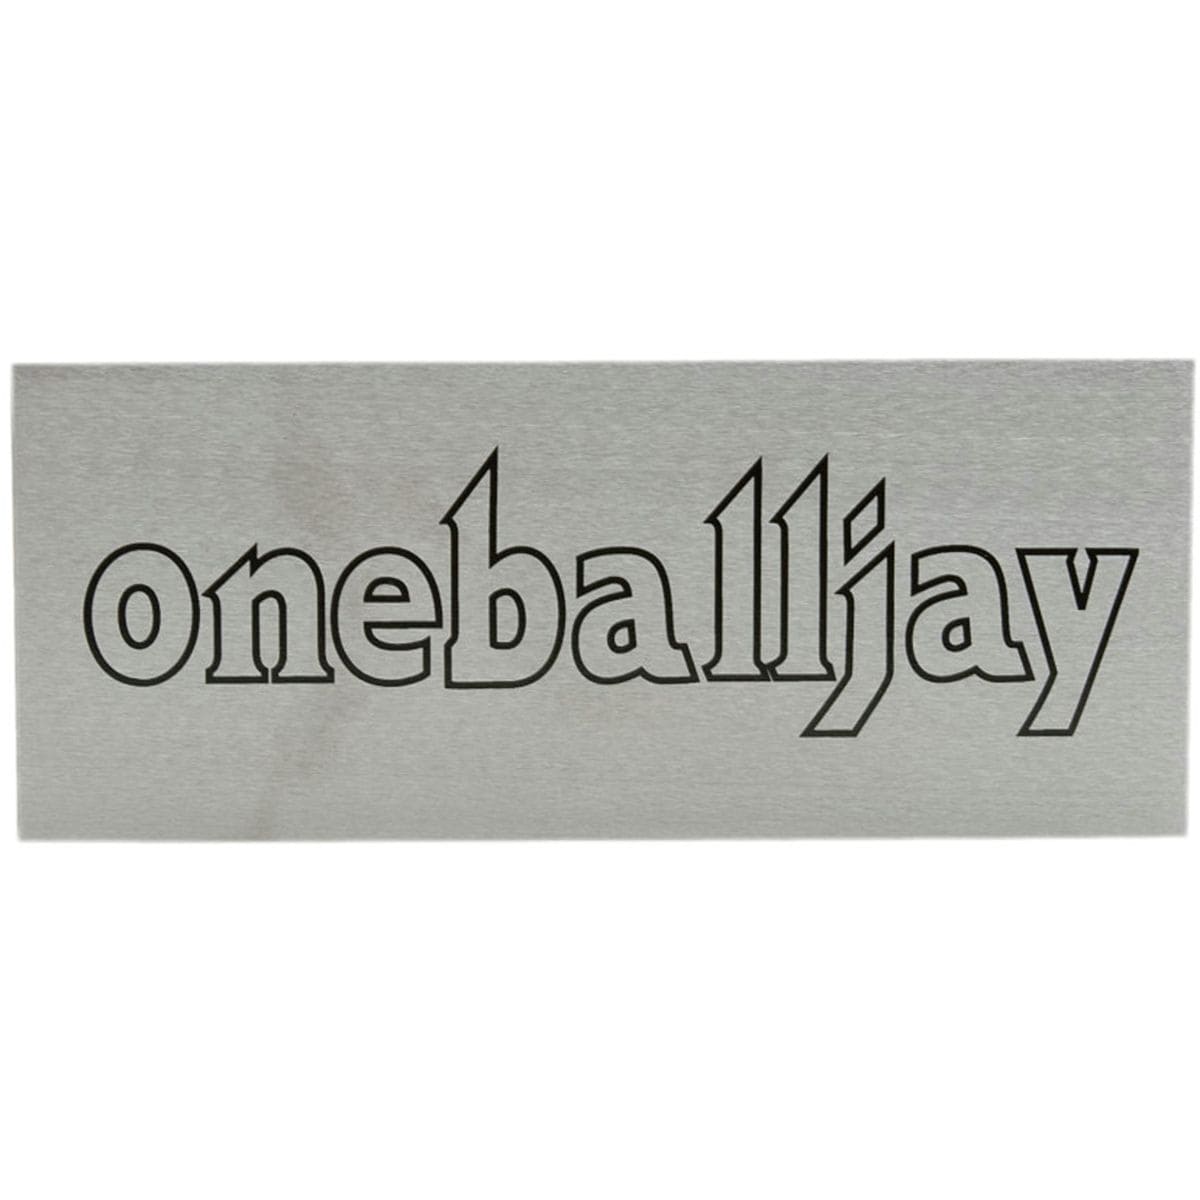 OneBallJay Super Steel Scraper